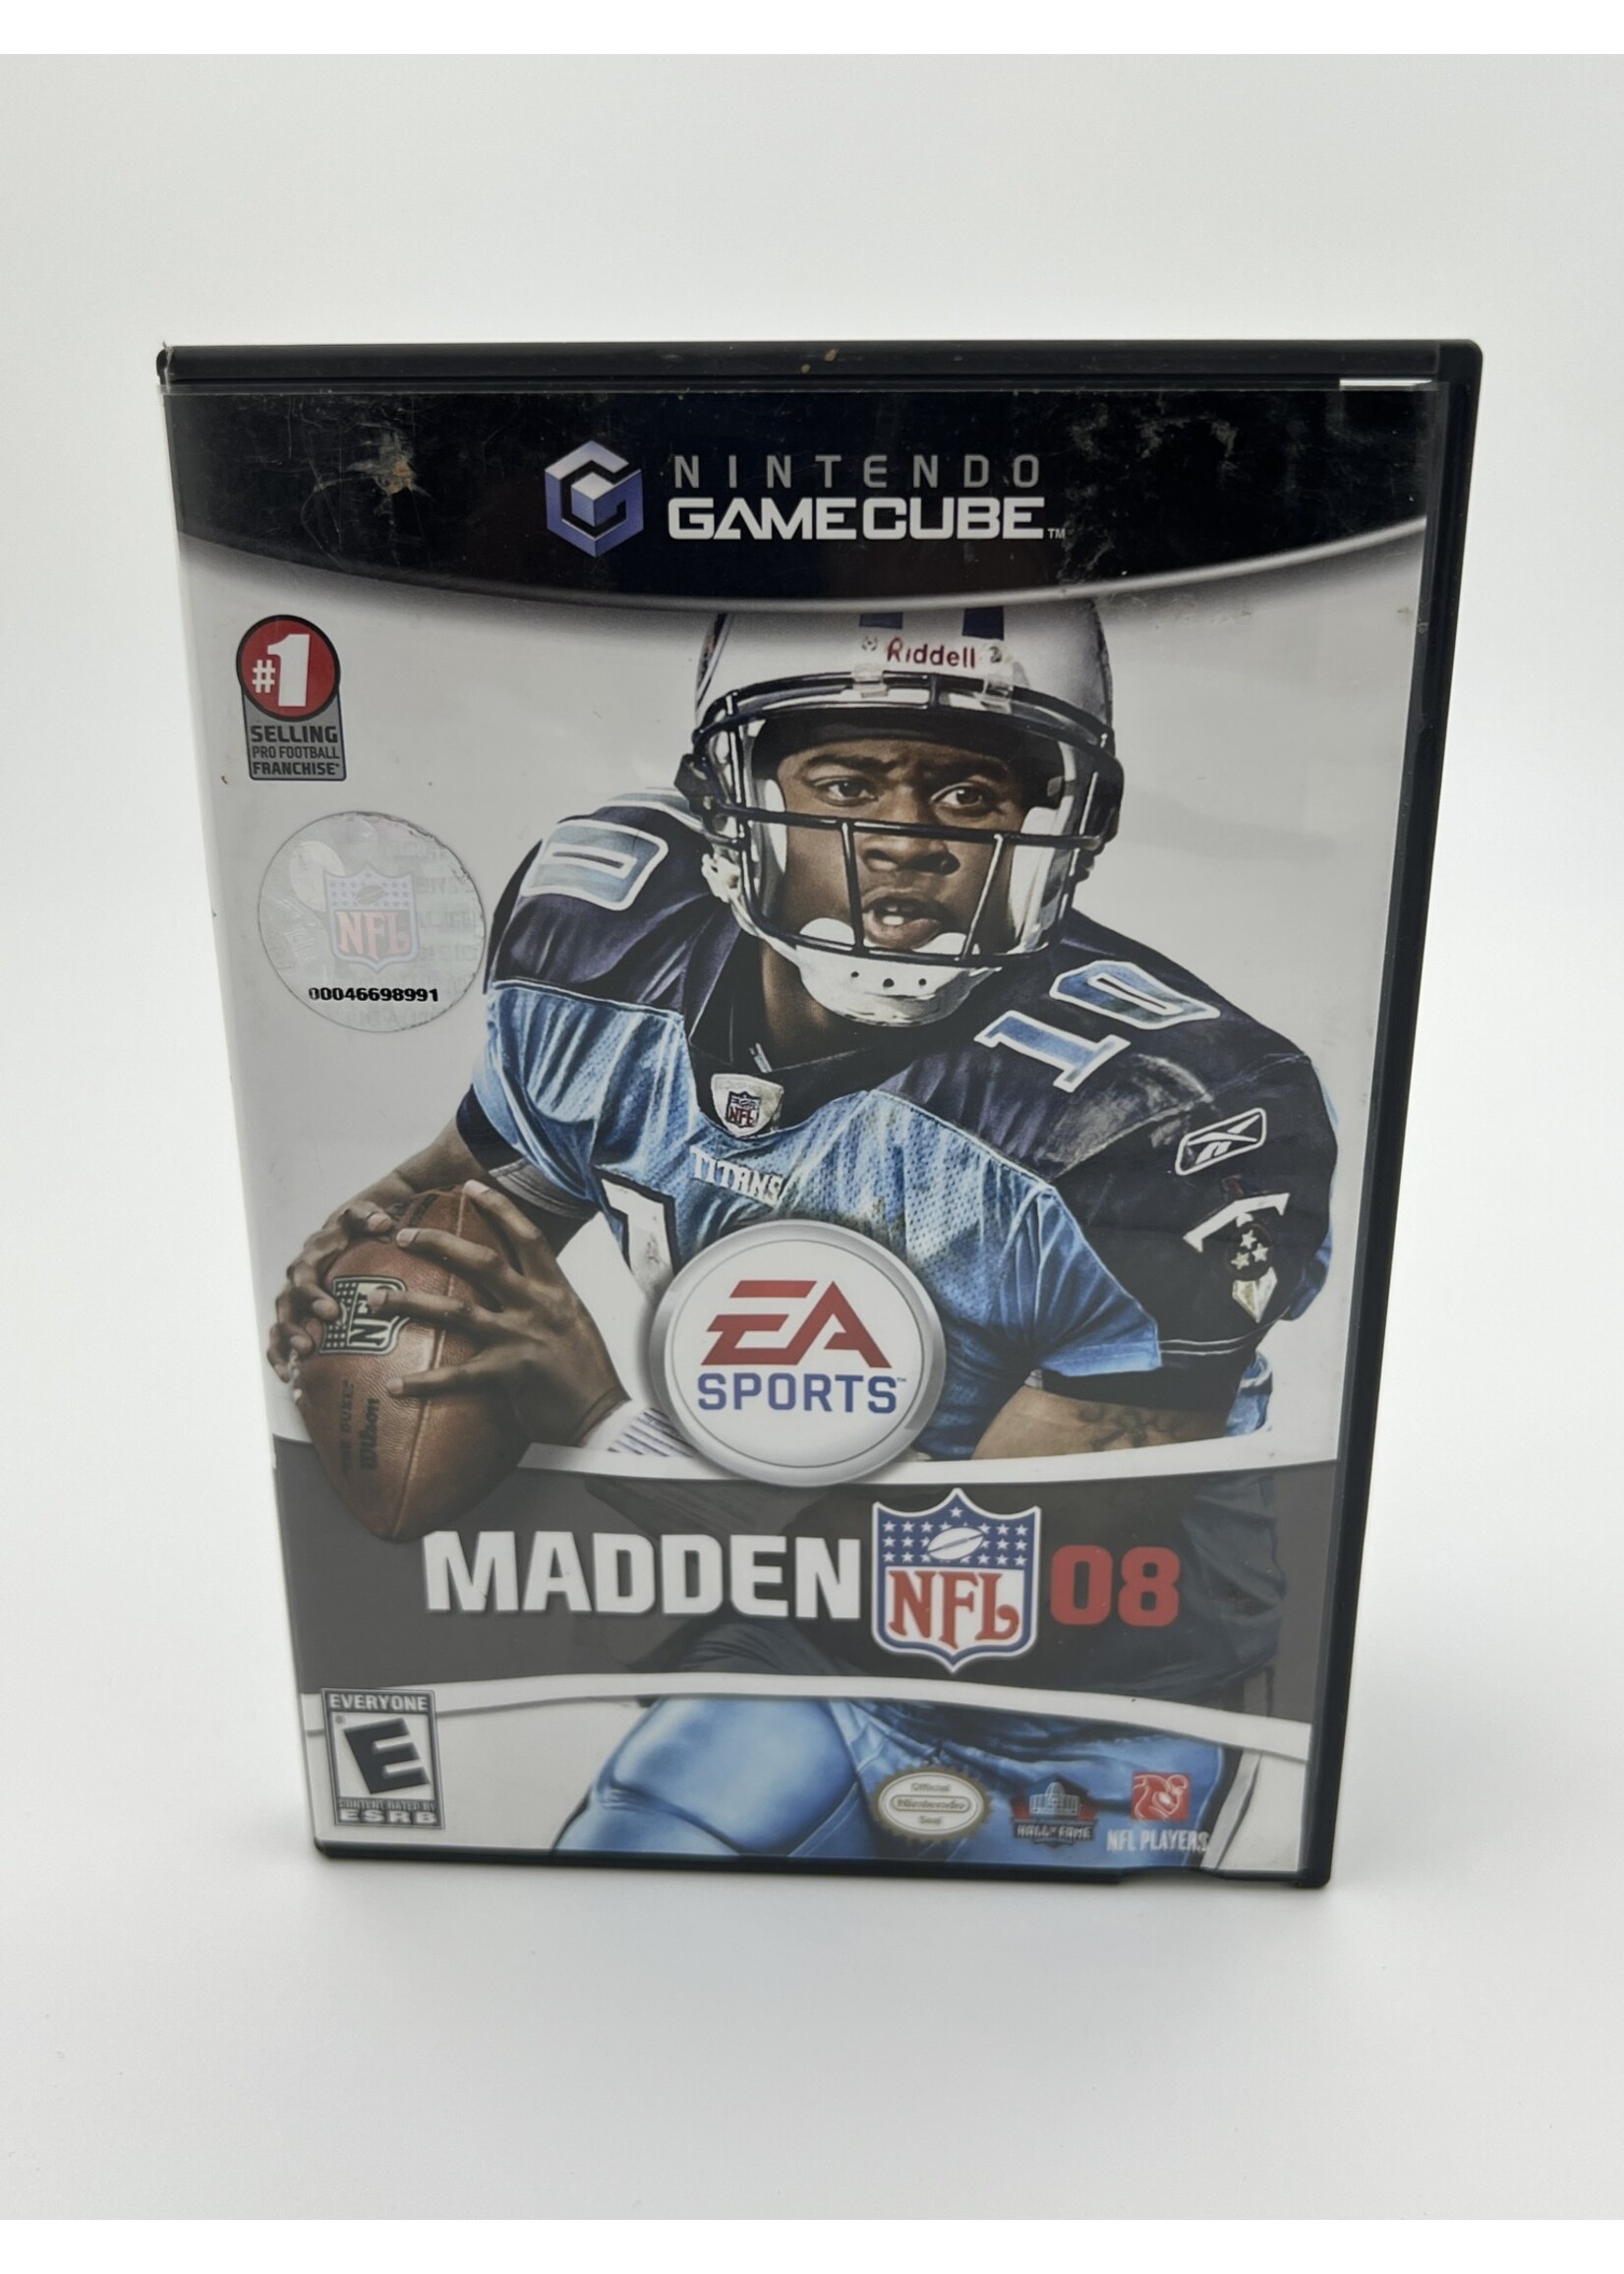 Nintendo Madden NFL 08 Gamecube